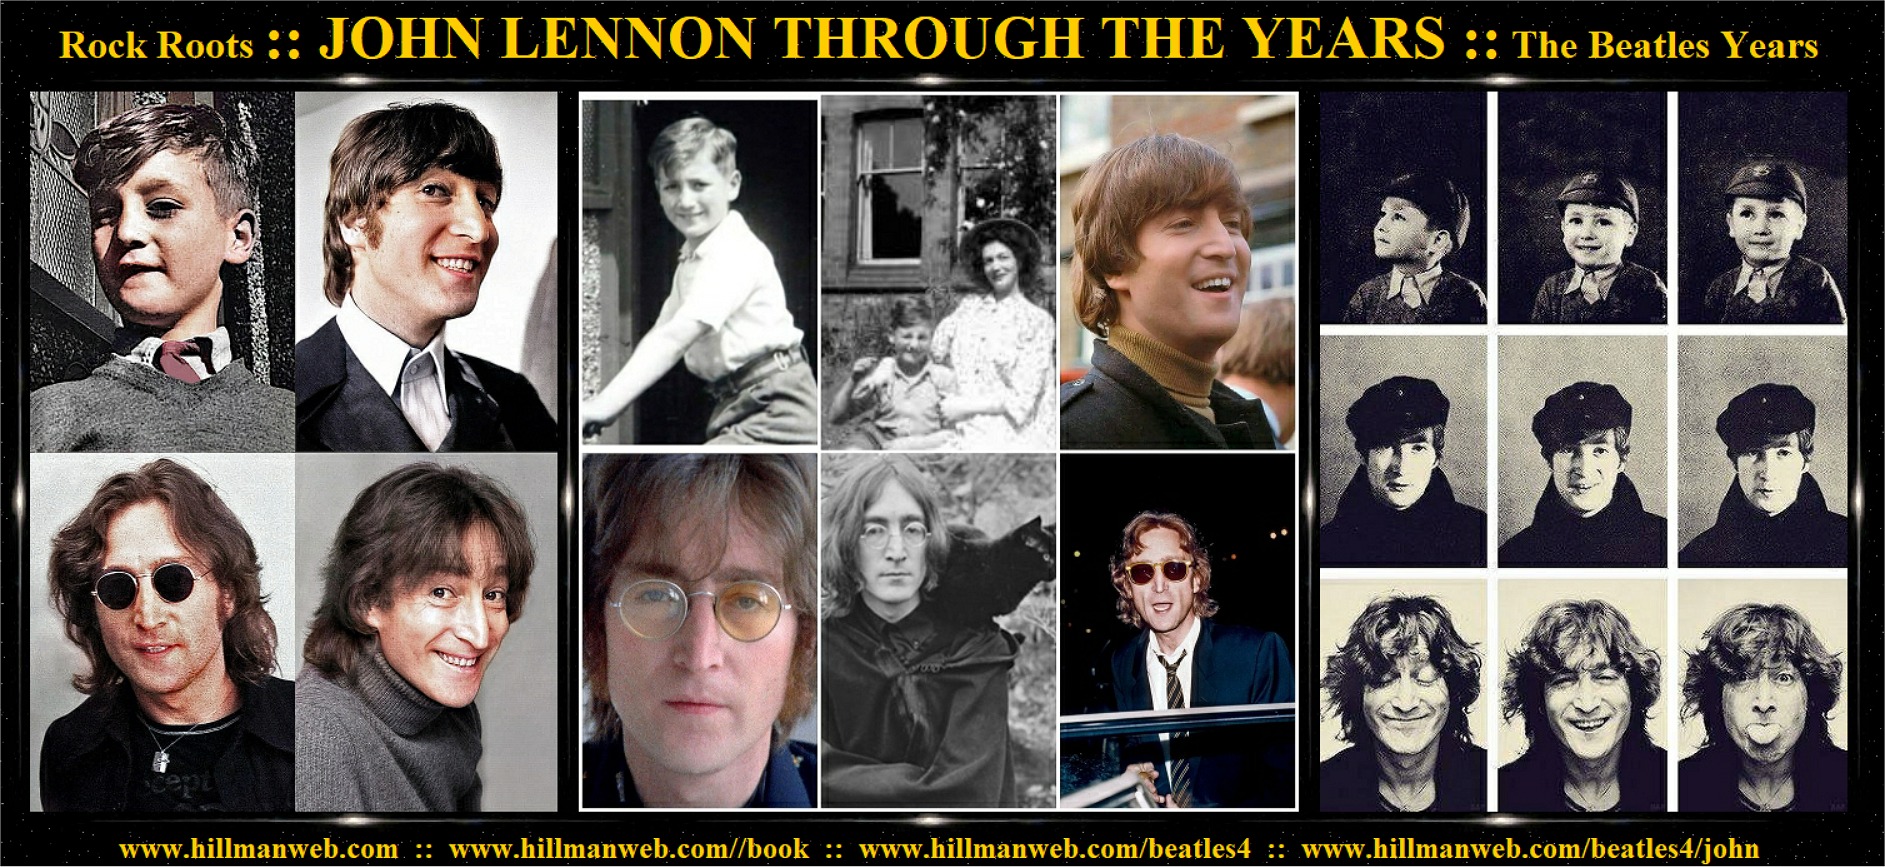 Quotes from John Lennon